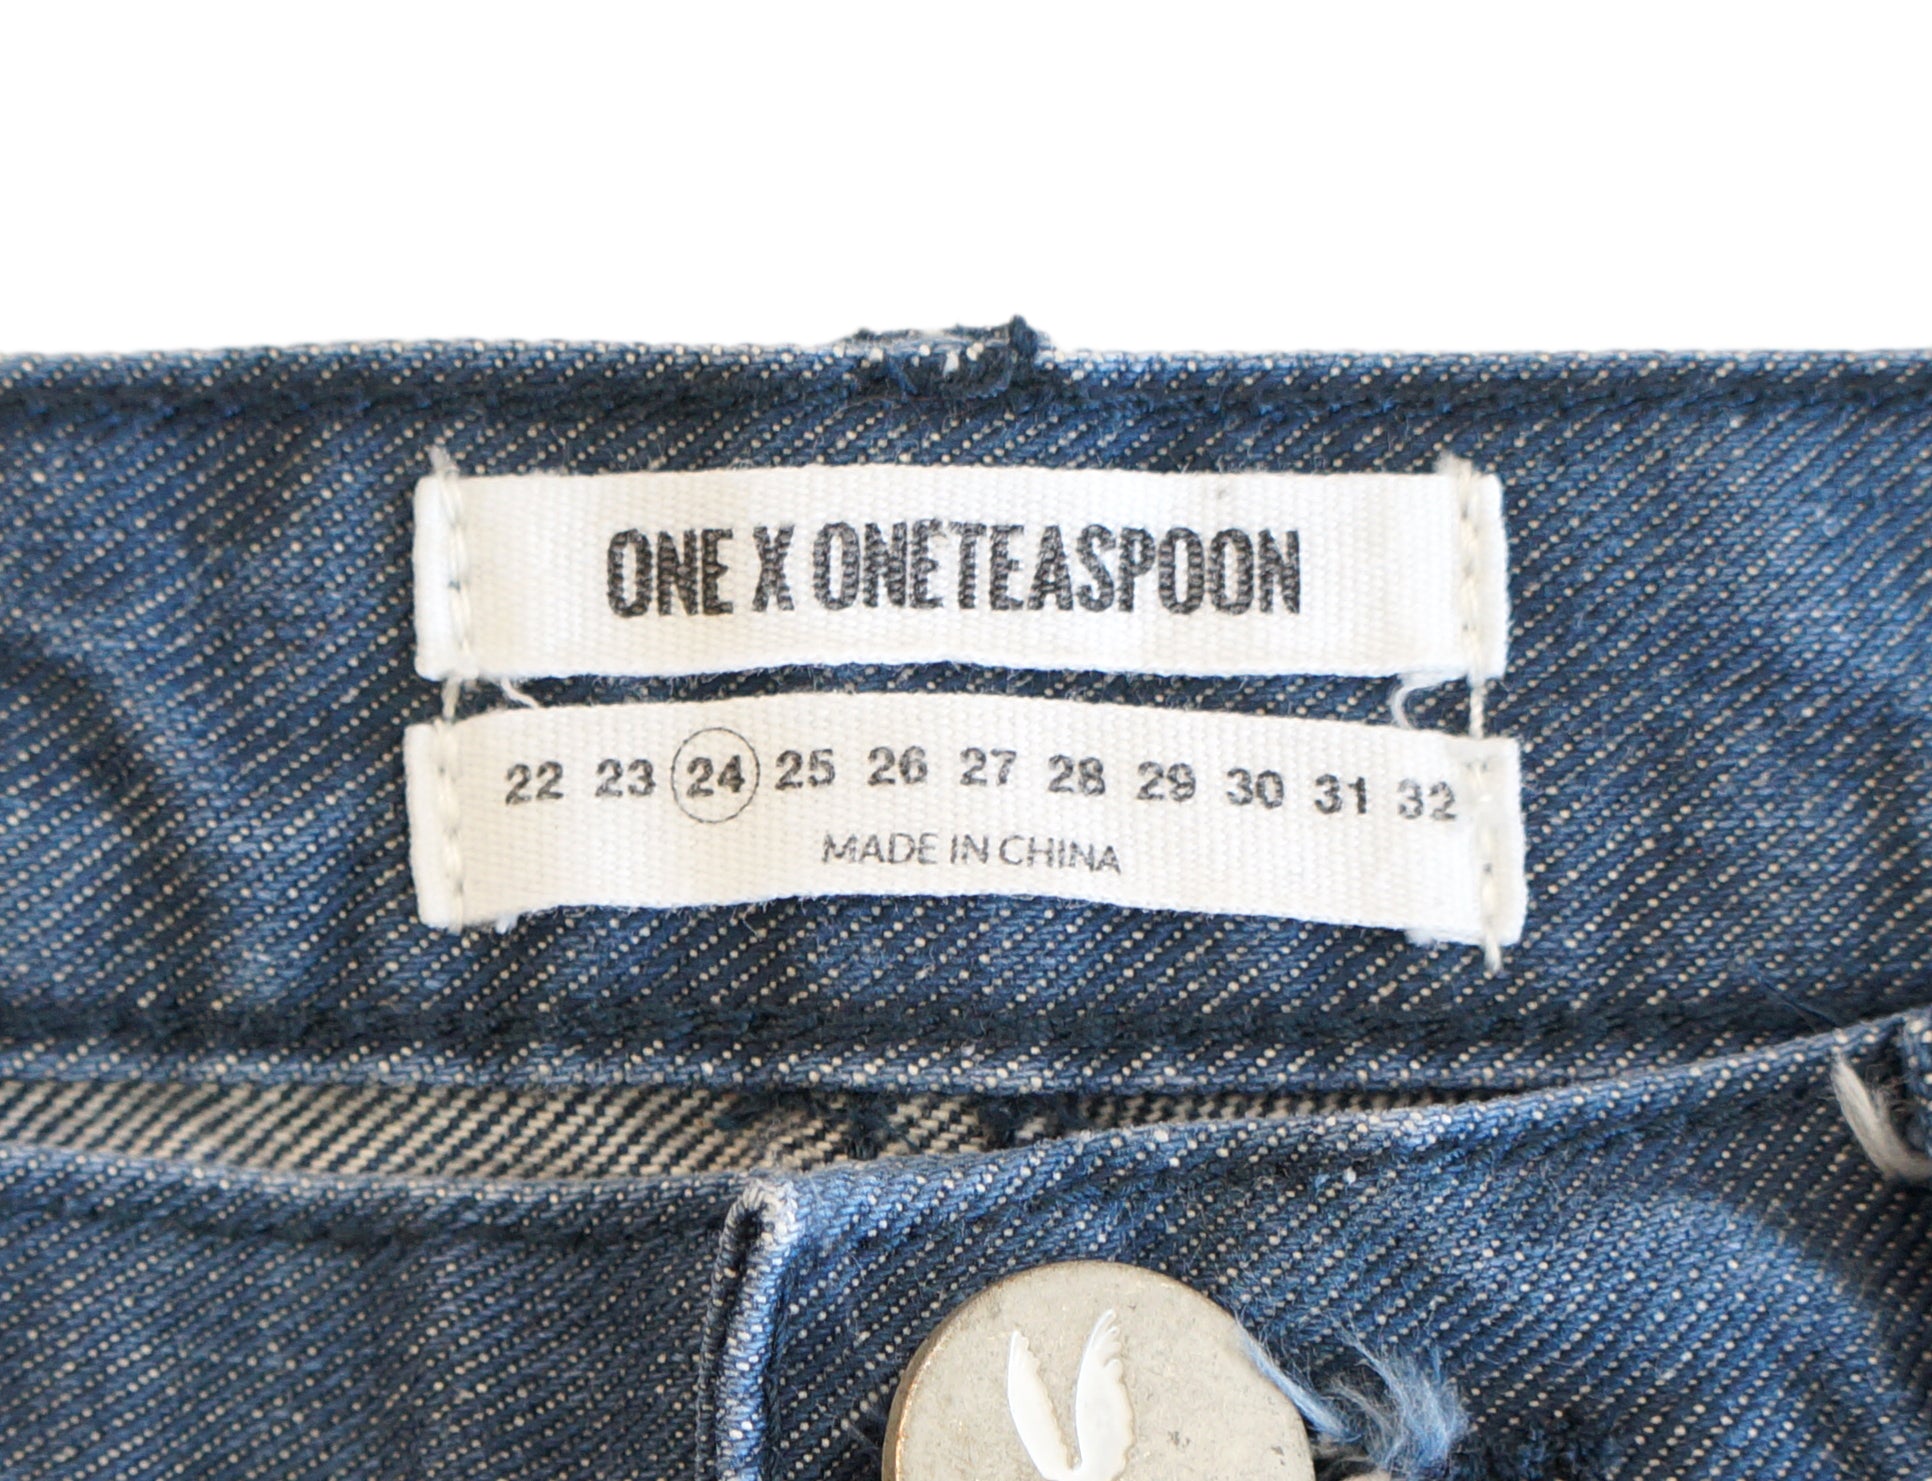 one x one teaspoon jeans